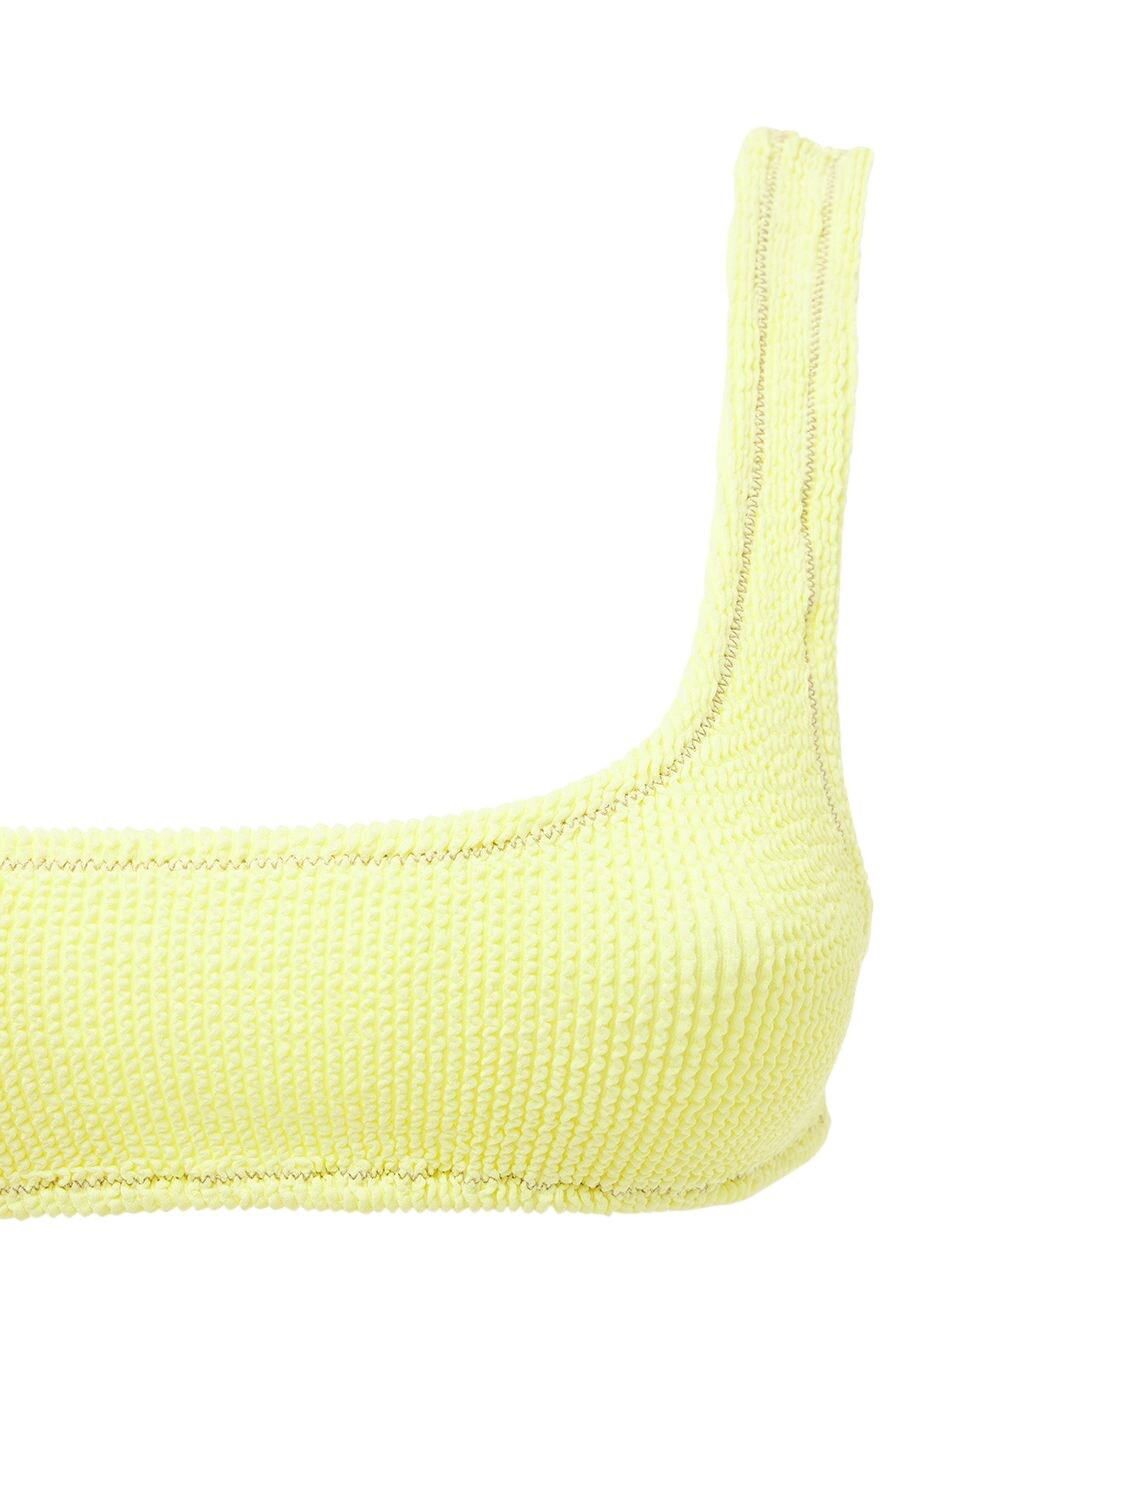 Shop Reina Olga Ginny Scrunch Bikini Set In Yellow